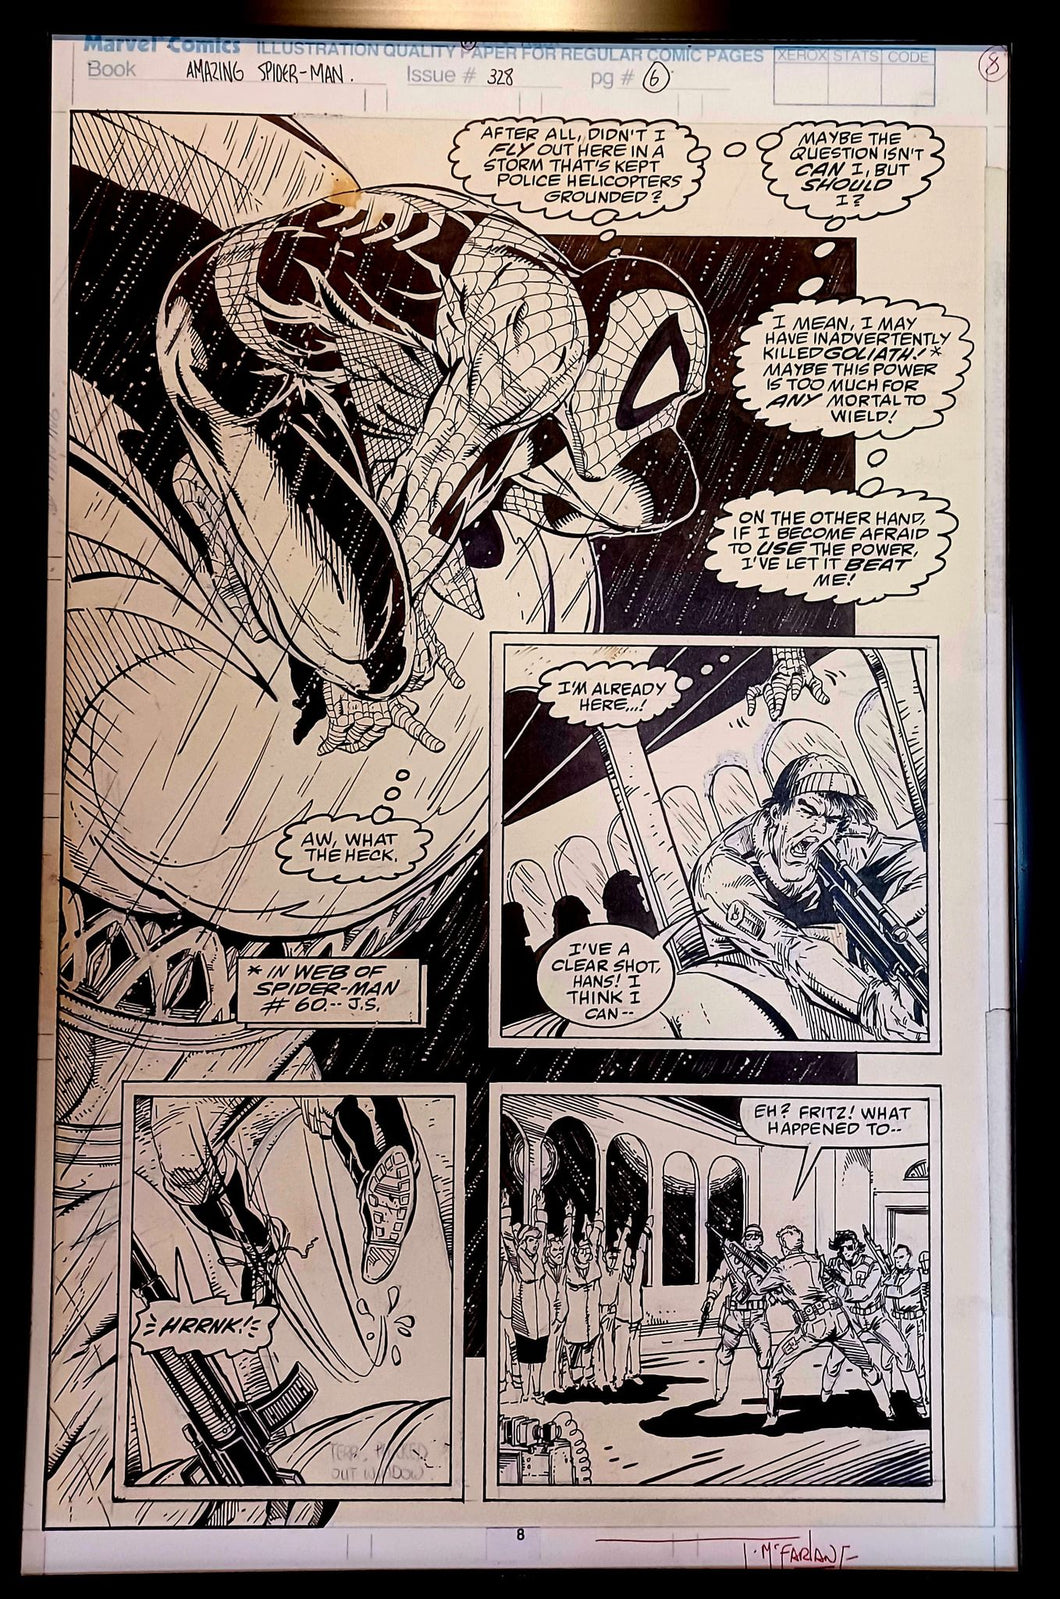 Amazing Spider-Man #328 pg. 6 by Todd McFarlane 11x17 FRAMED Original Art Print Comic Poster